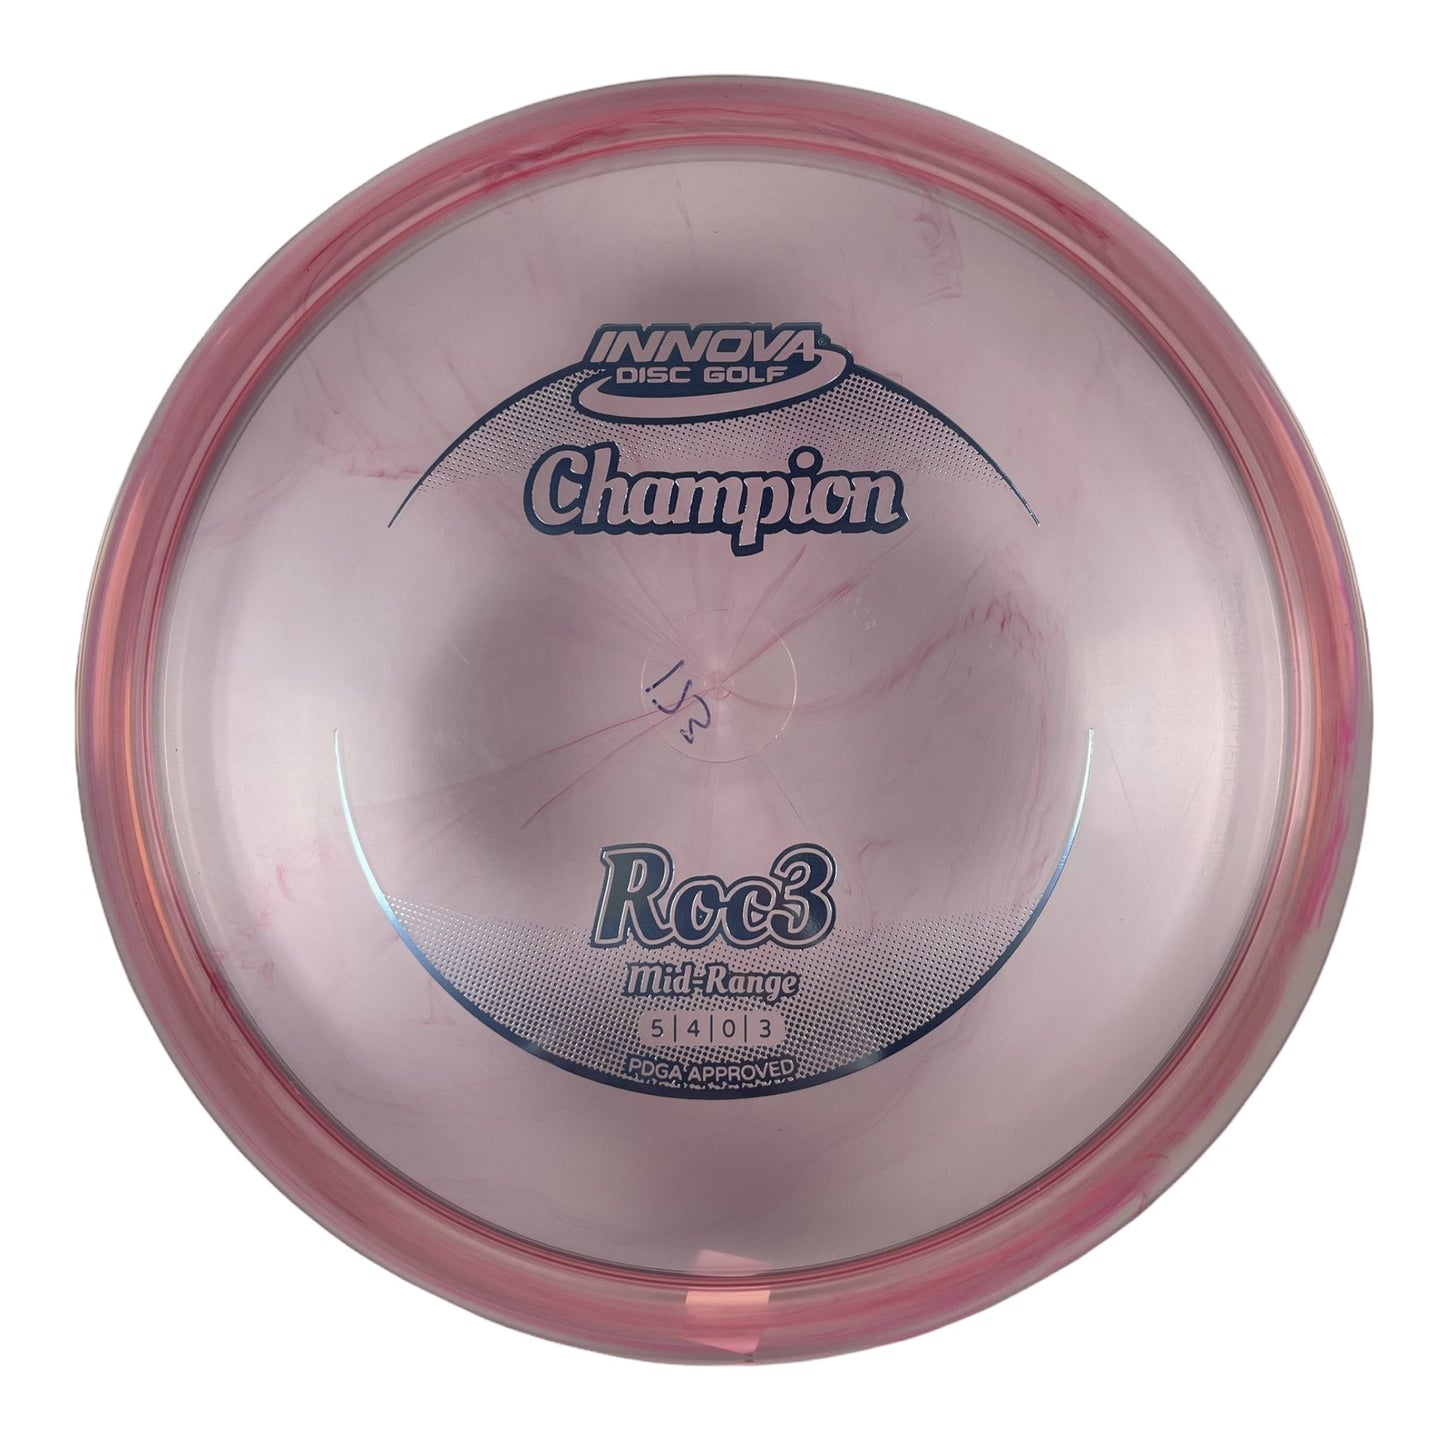 Innova Champion Discs Roc3 | Champion | Pink/Silver 173g Disc Golf